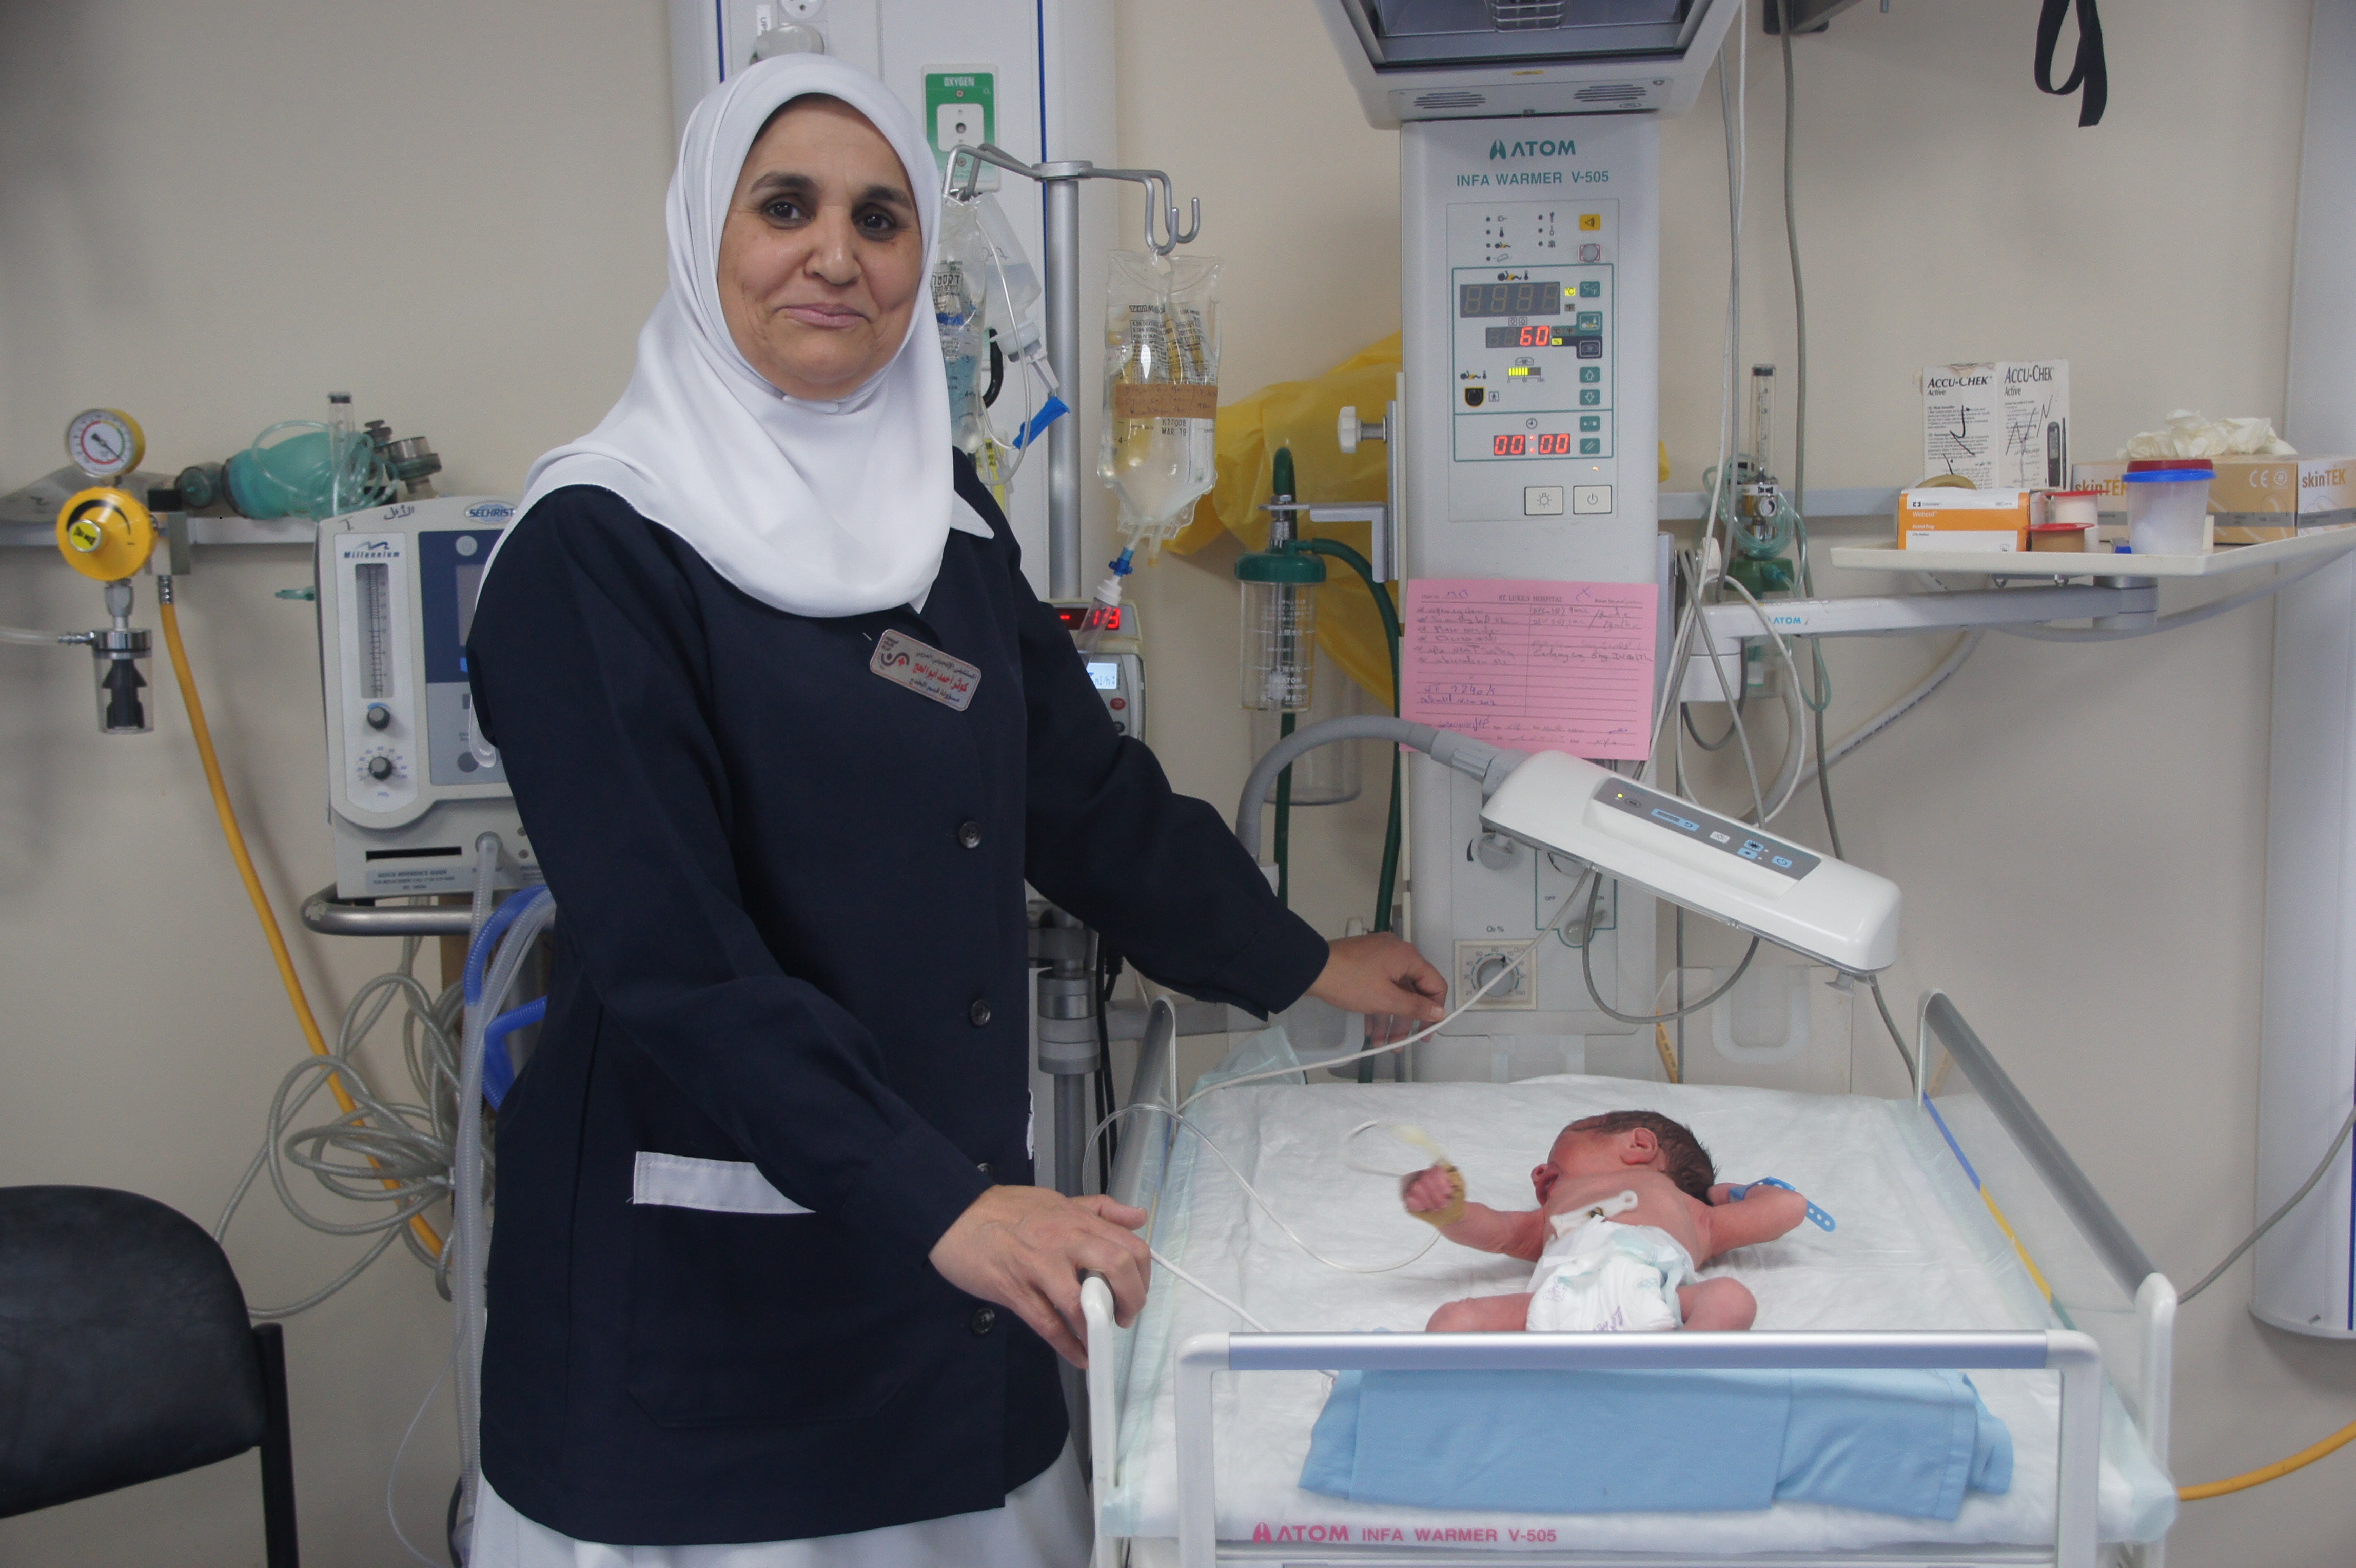 A photo of a nurse smiling at St. Luke's Hospital West Bank, Palestine.